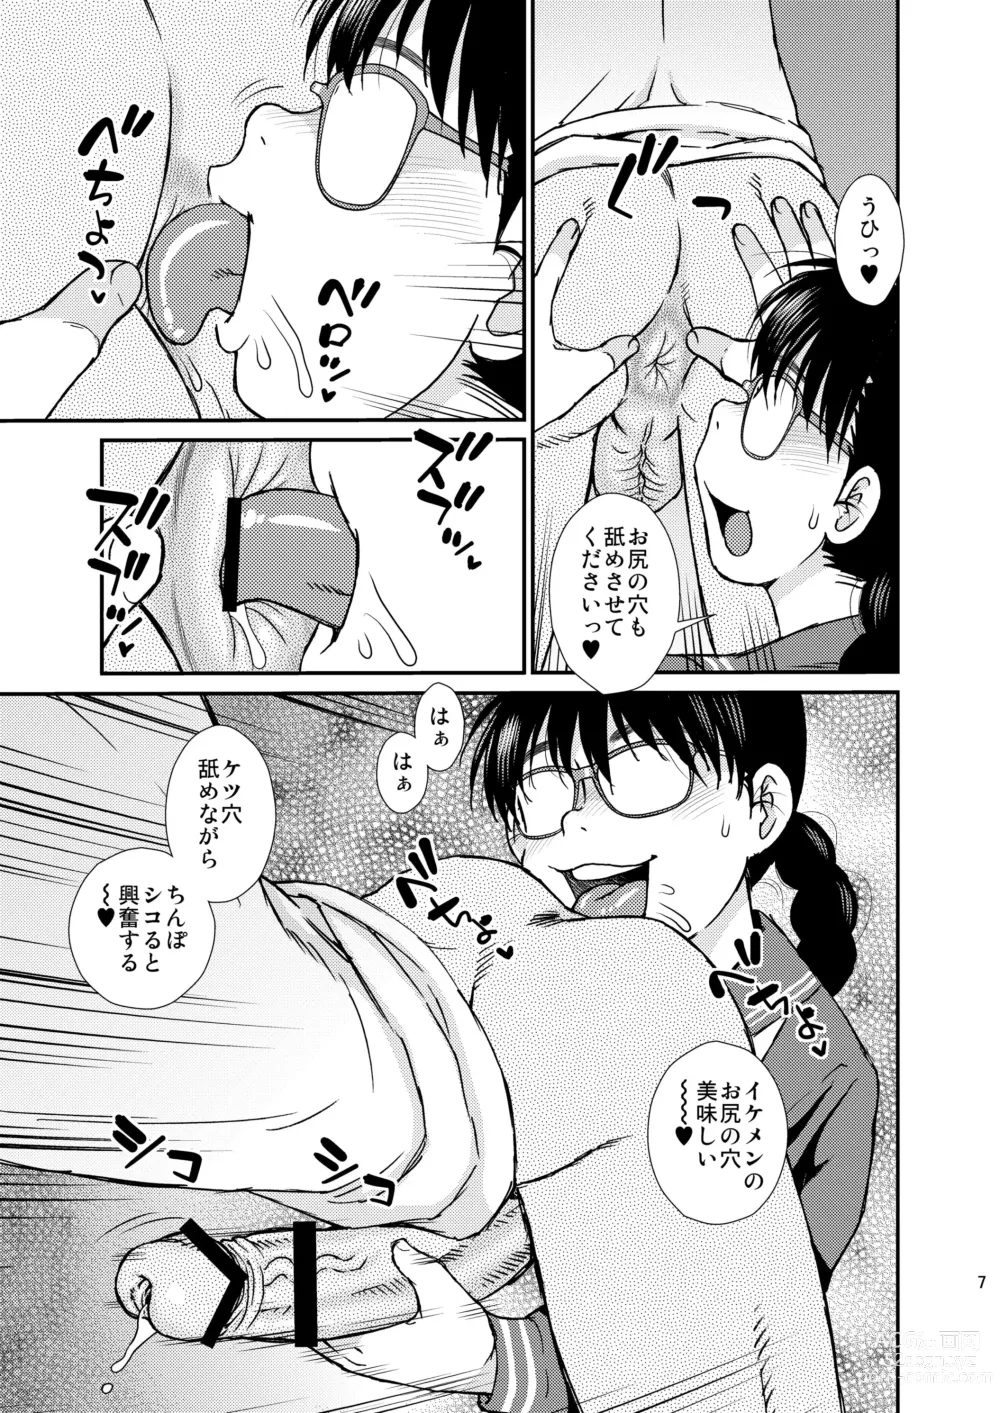 Page 6 of doujinshi Tatsumi-san no